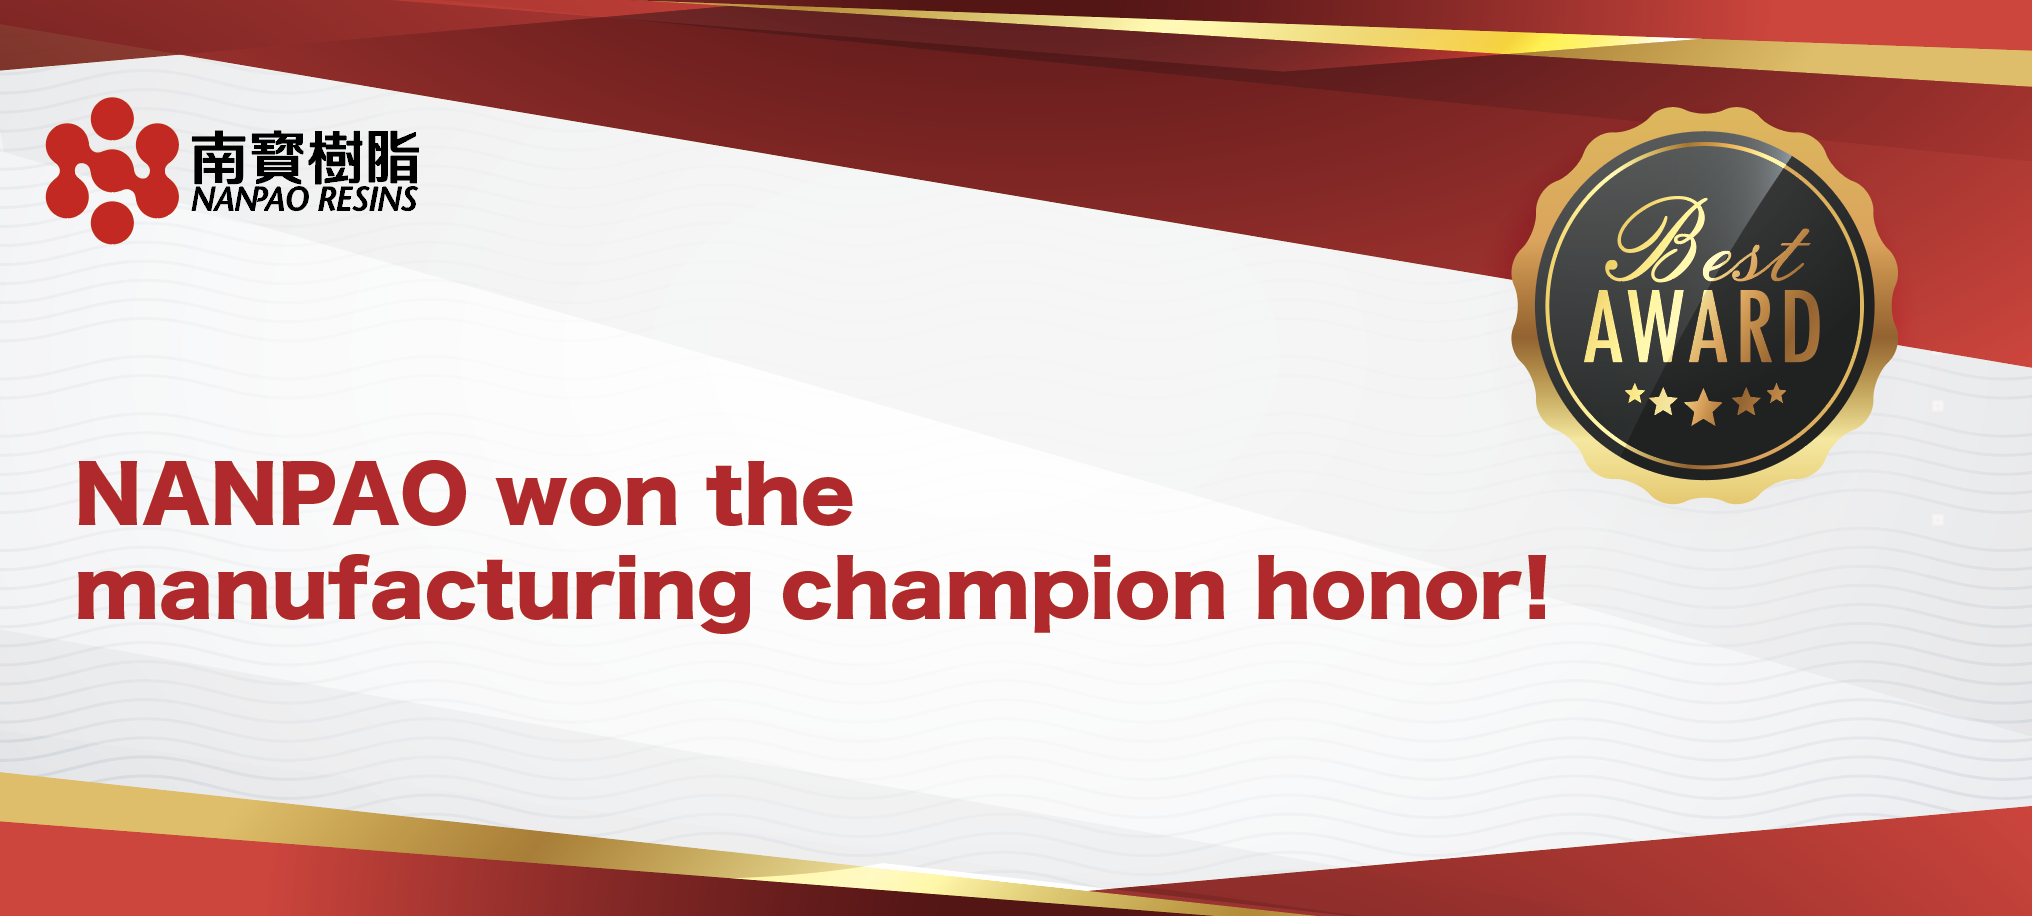 NANPAO won the manufacturing champion honor!